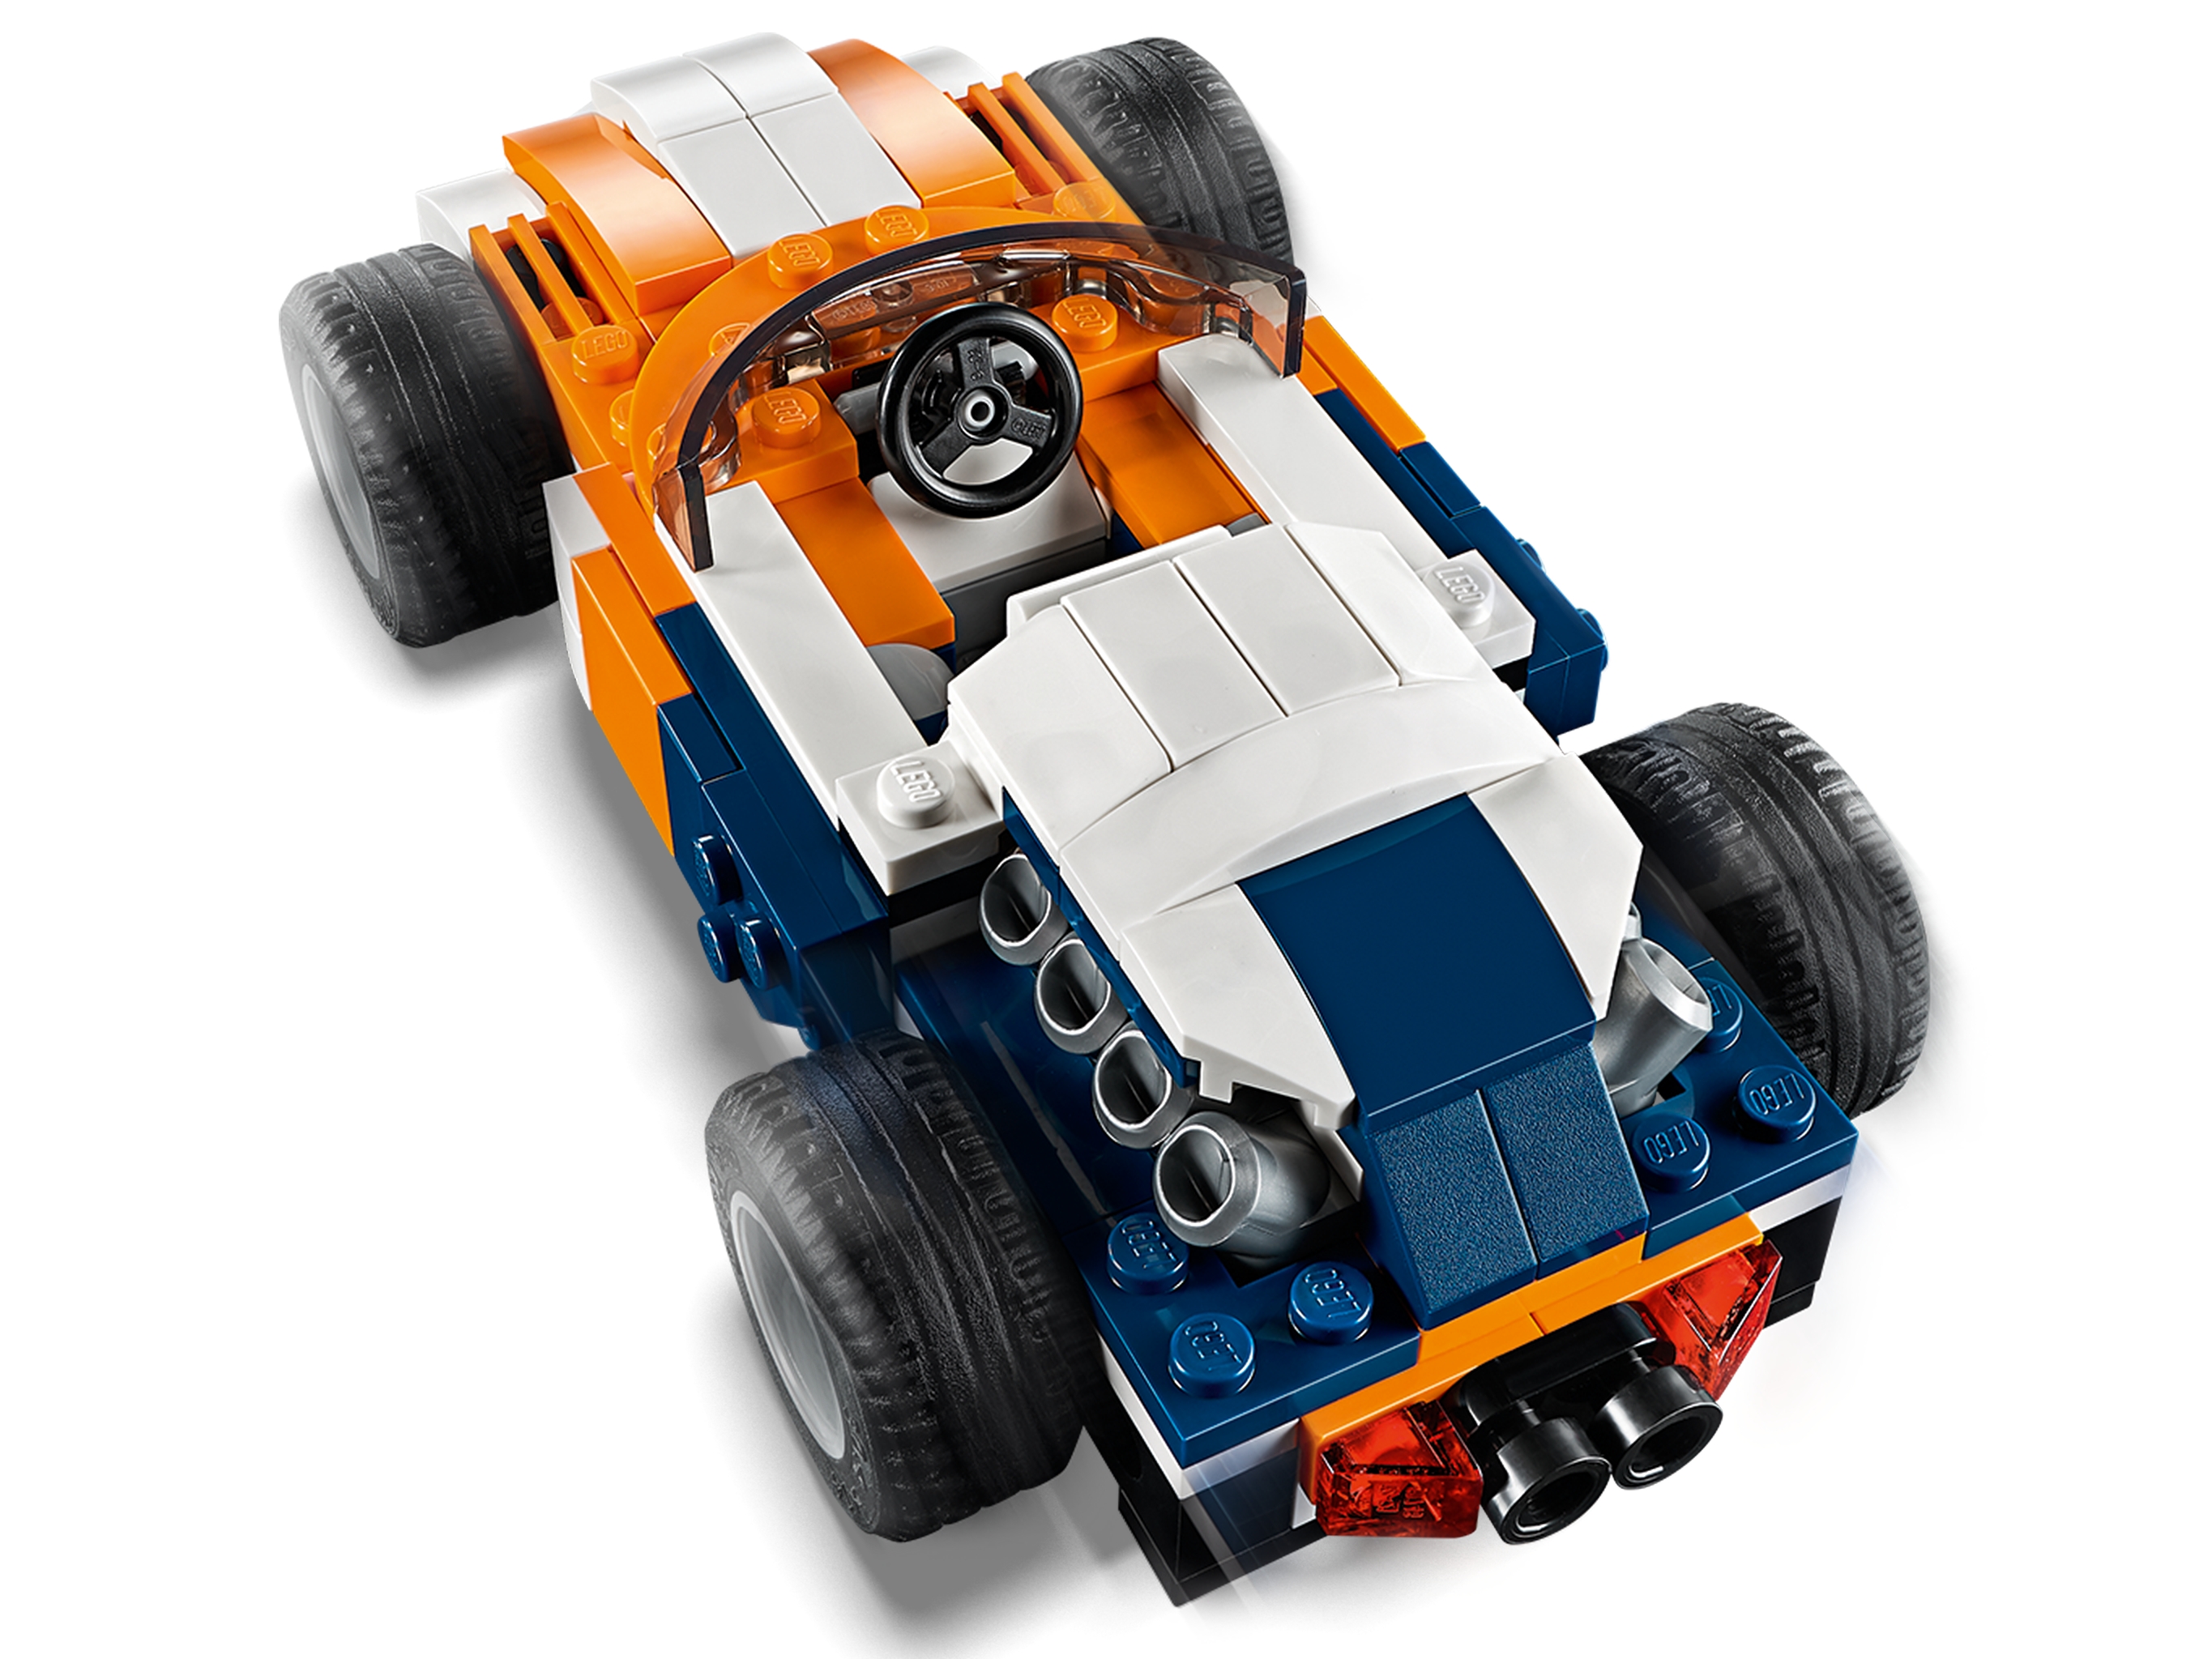 for sale online LEGO Sunset Track Racer LEGO Creator 31089